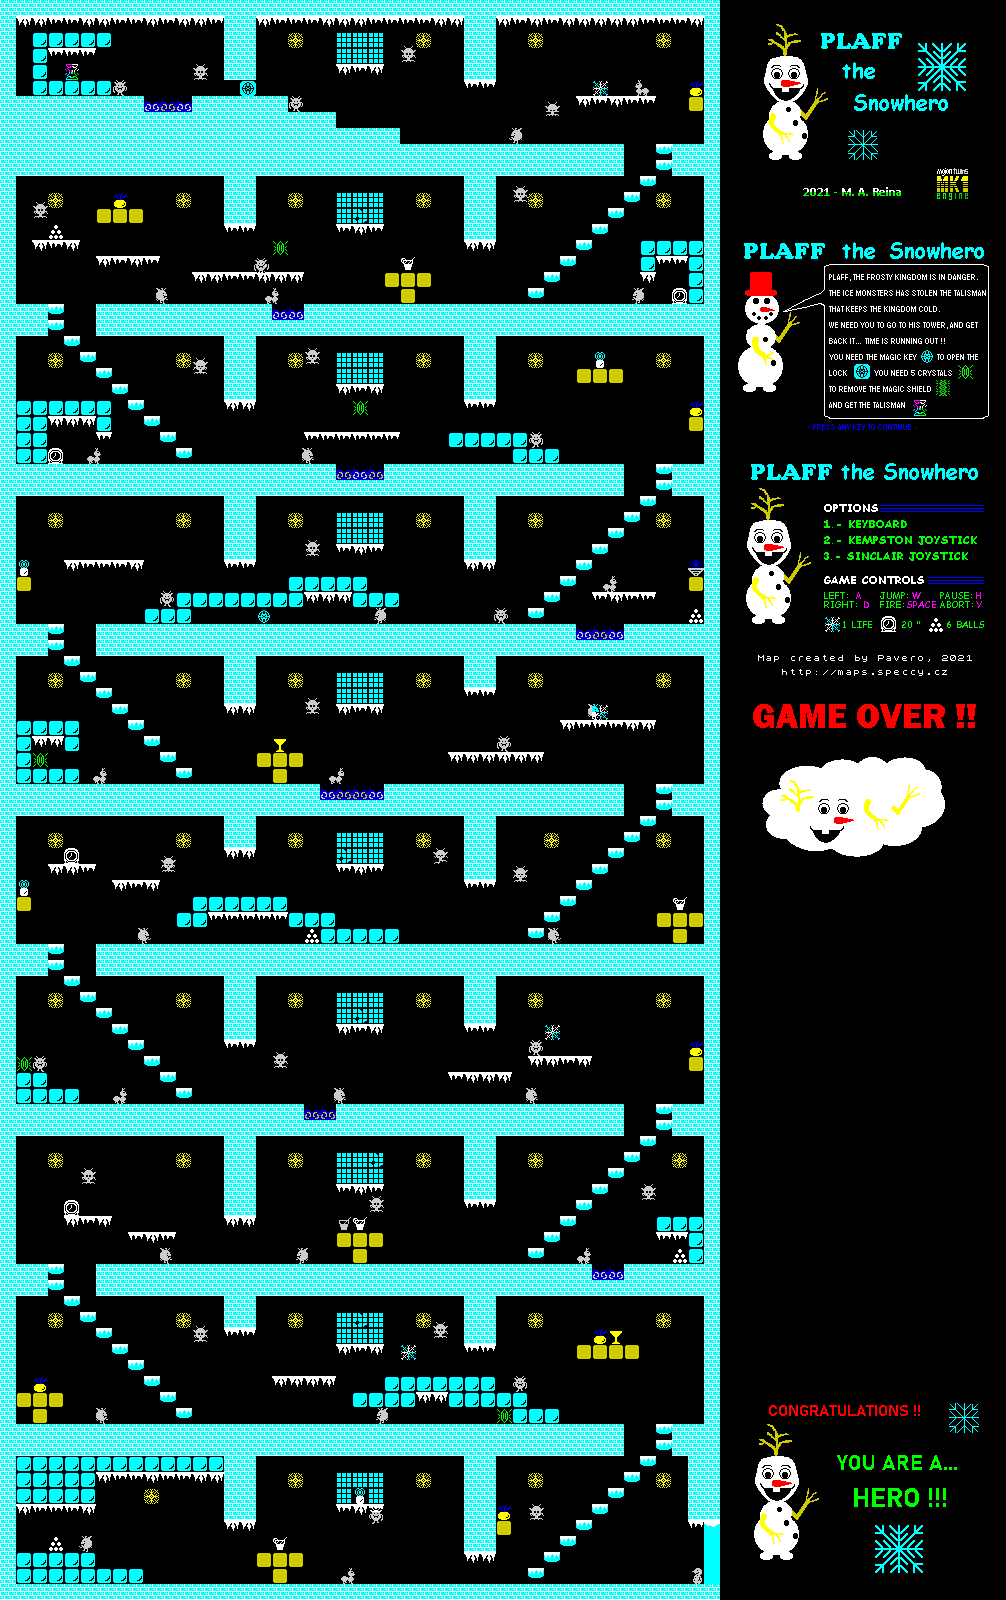 Plaff the Snowhero - The Map